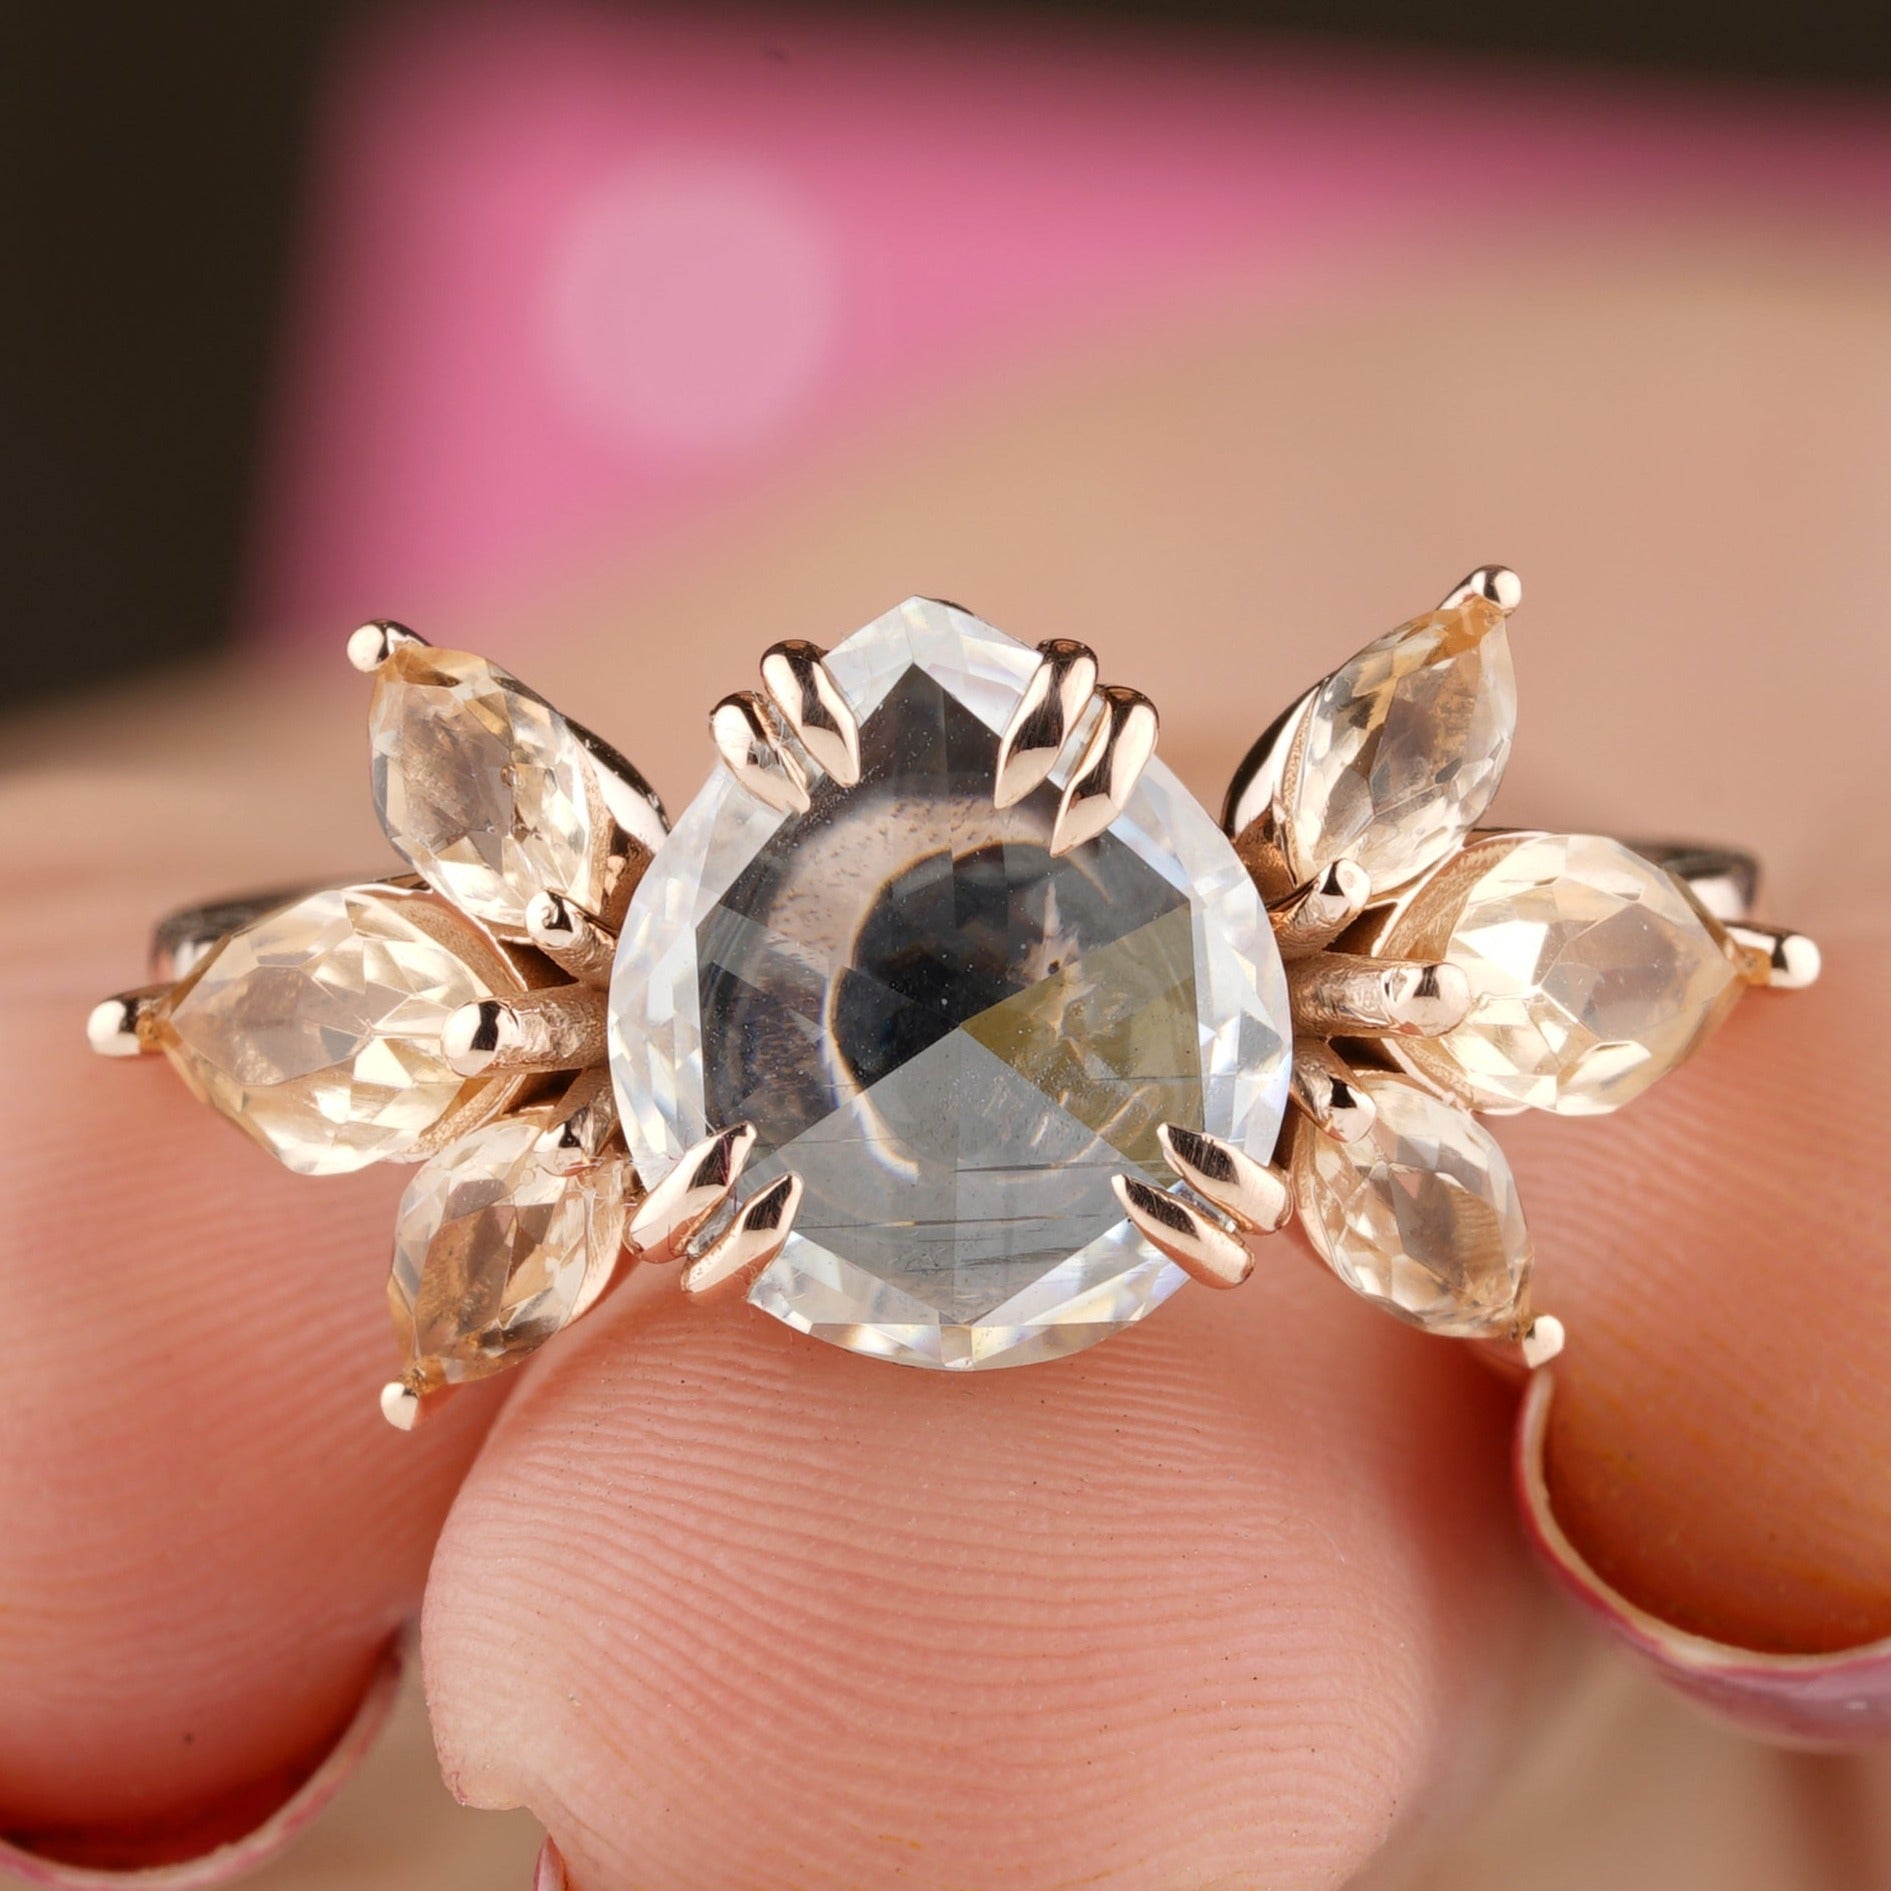 Vintage Pear Shaped Moissanite Engagement Ring - Eurekalook